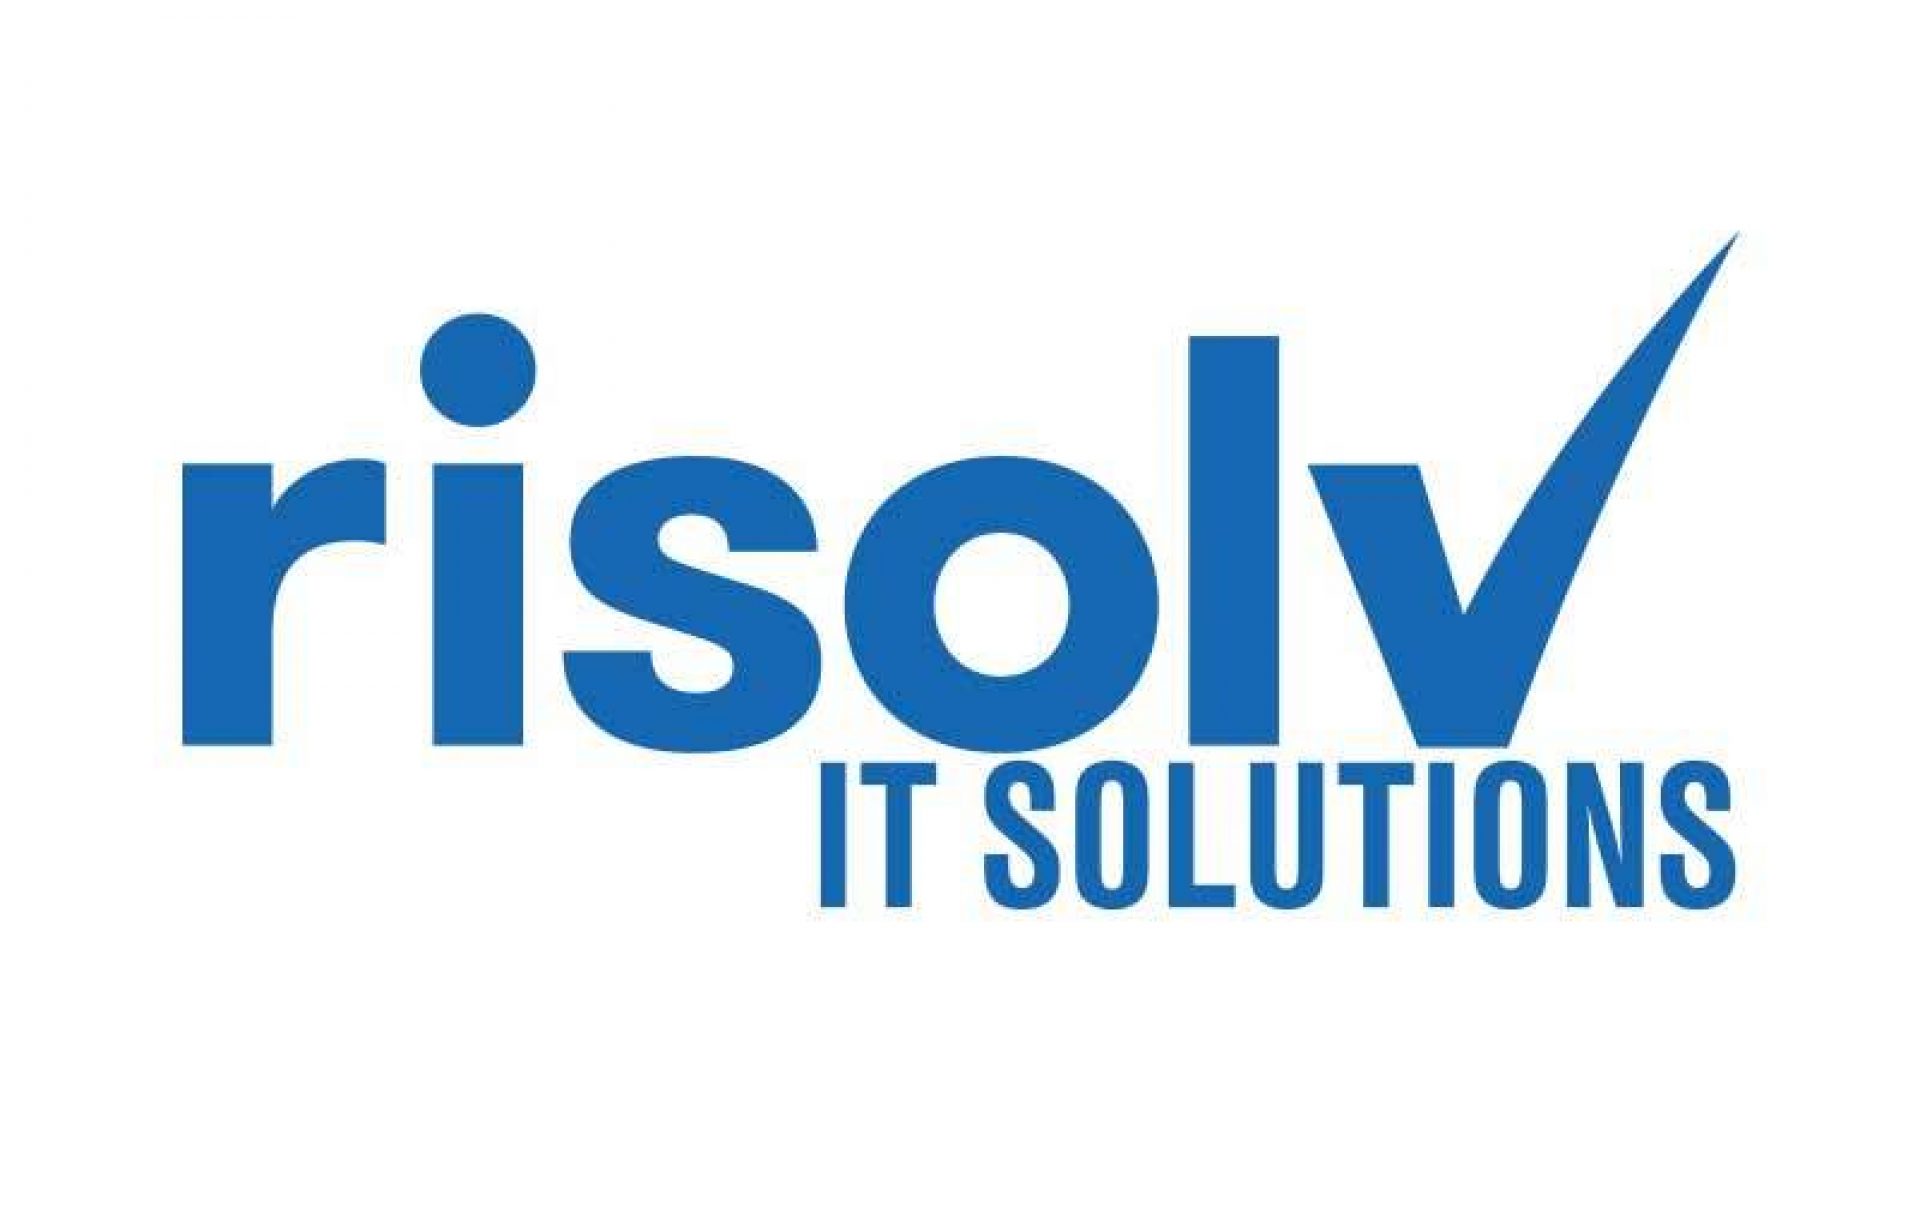 The new Risolv logo